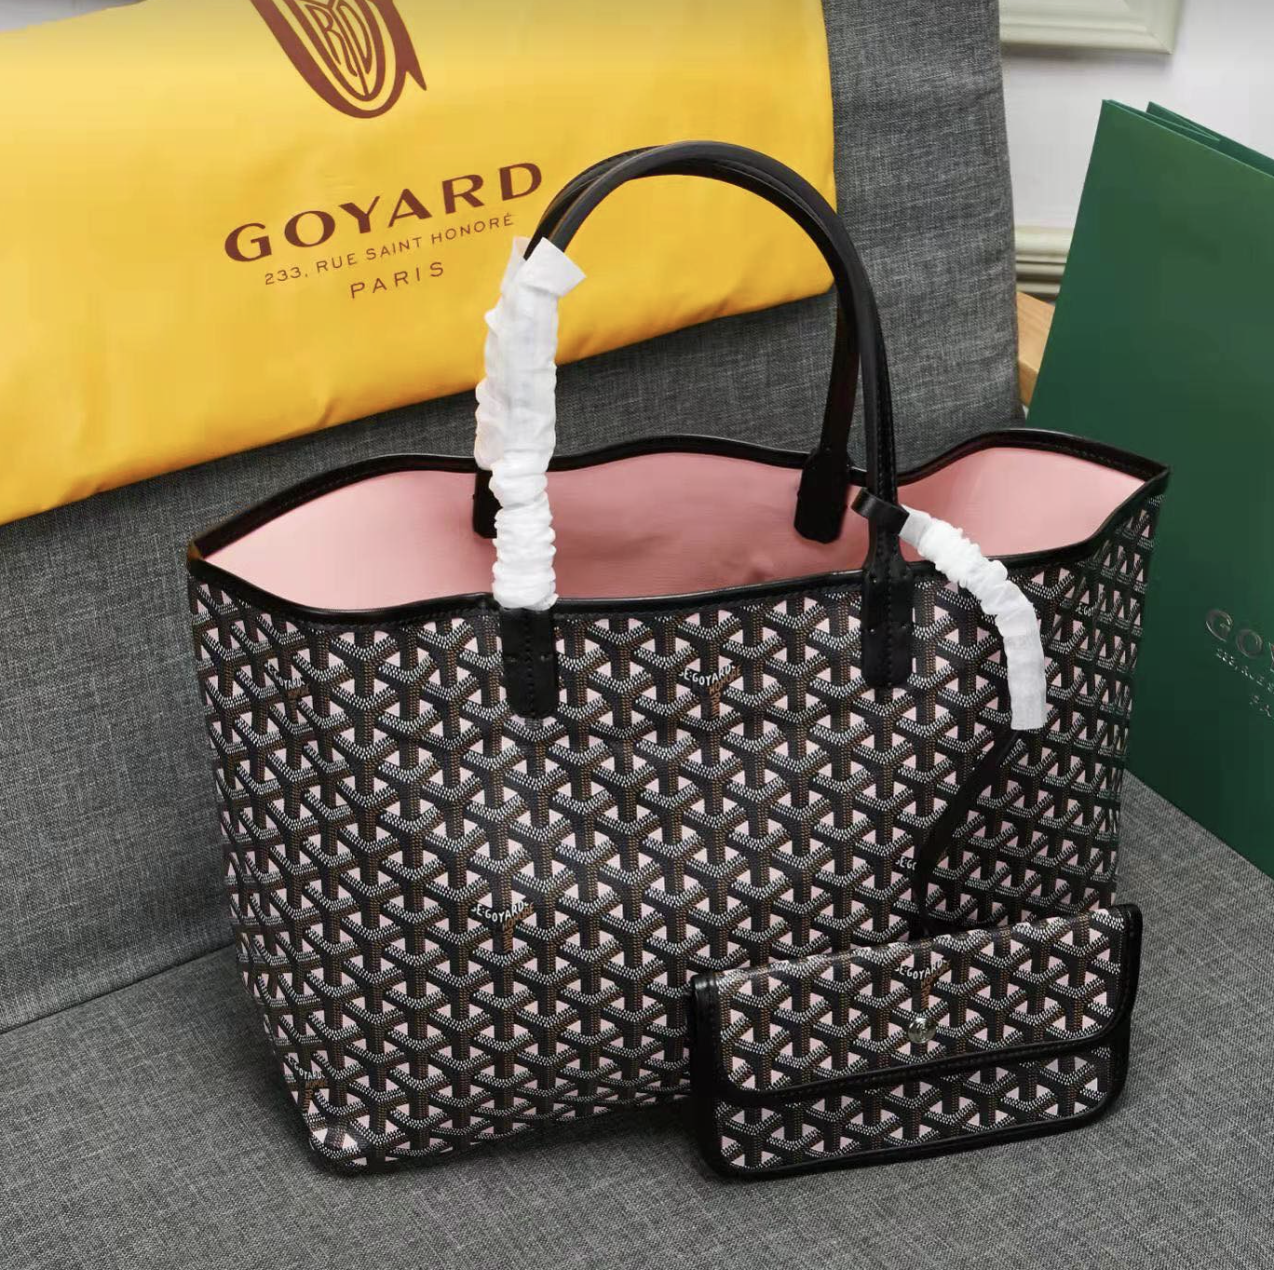 Personalized Goyard Bag Online, SAVE 52% 